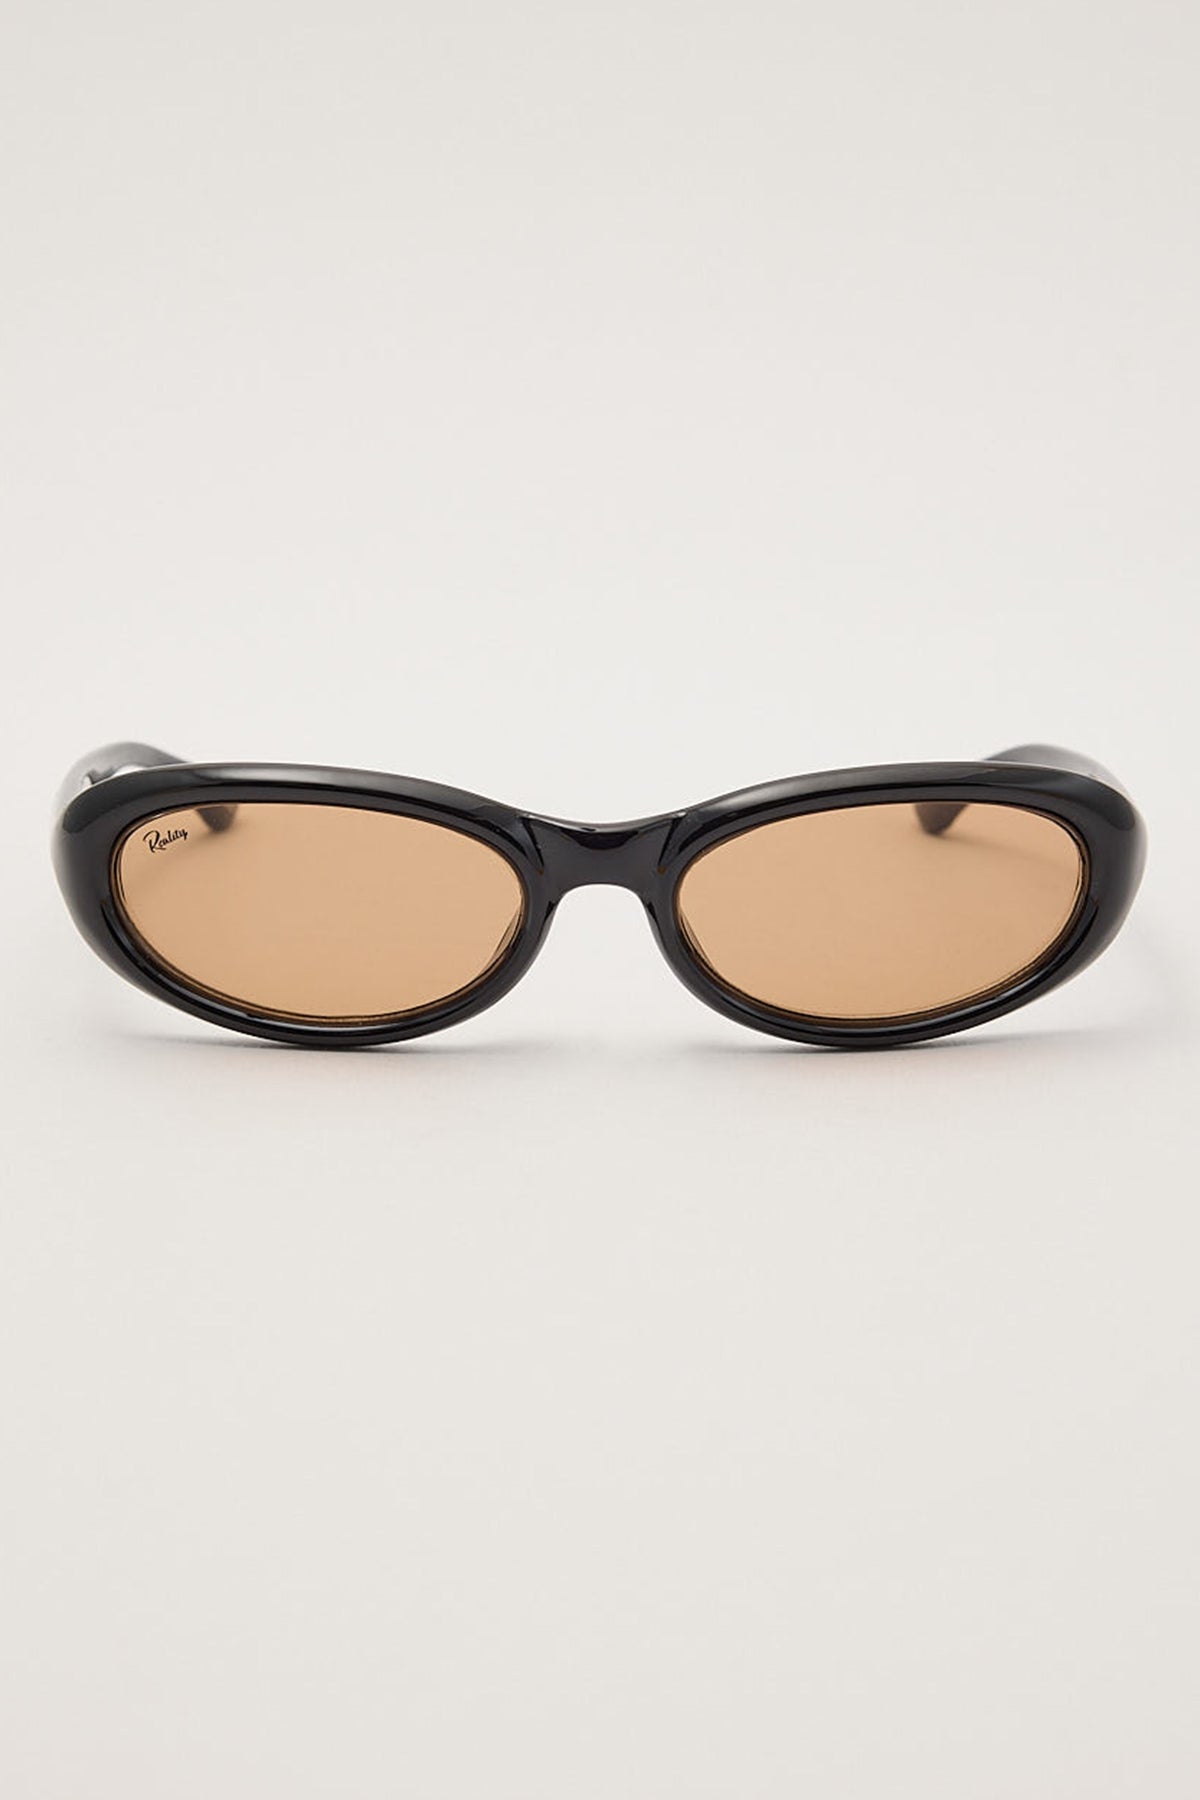 Reality Eyewear Eclipse Black/Cinnamon